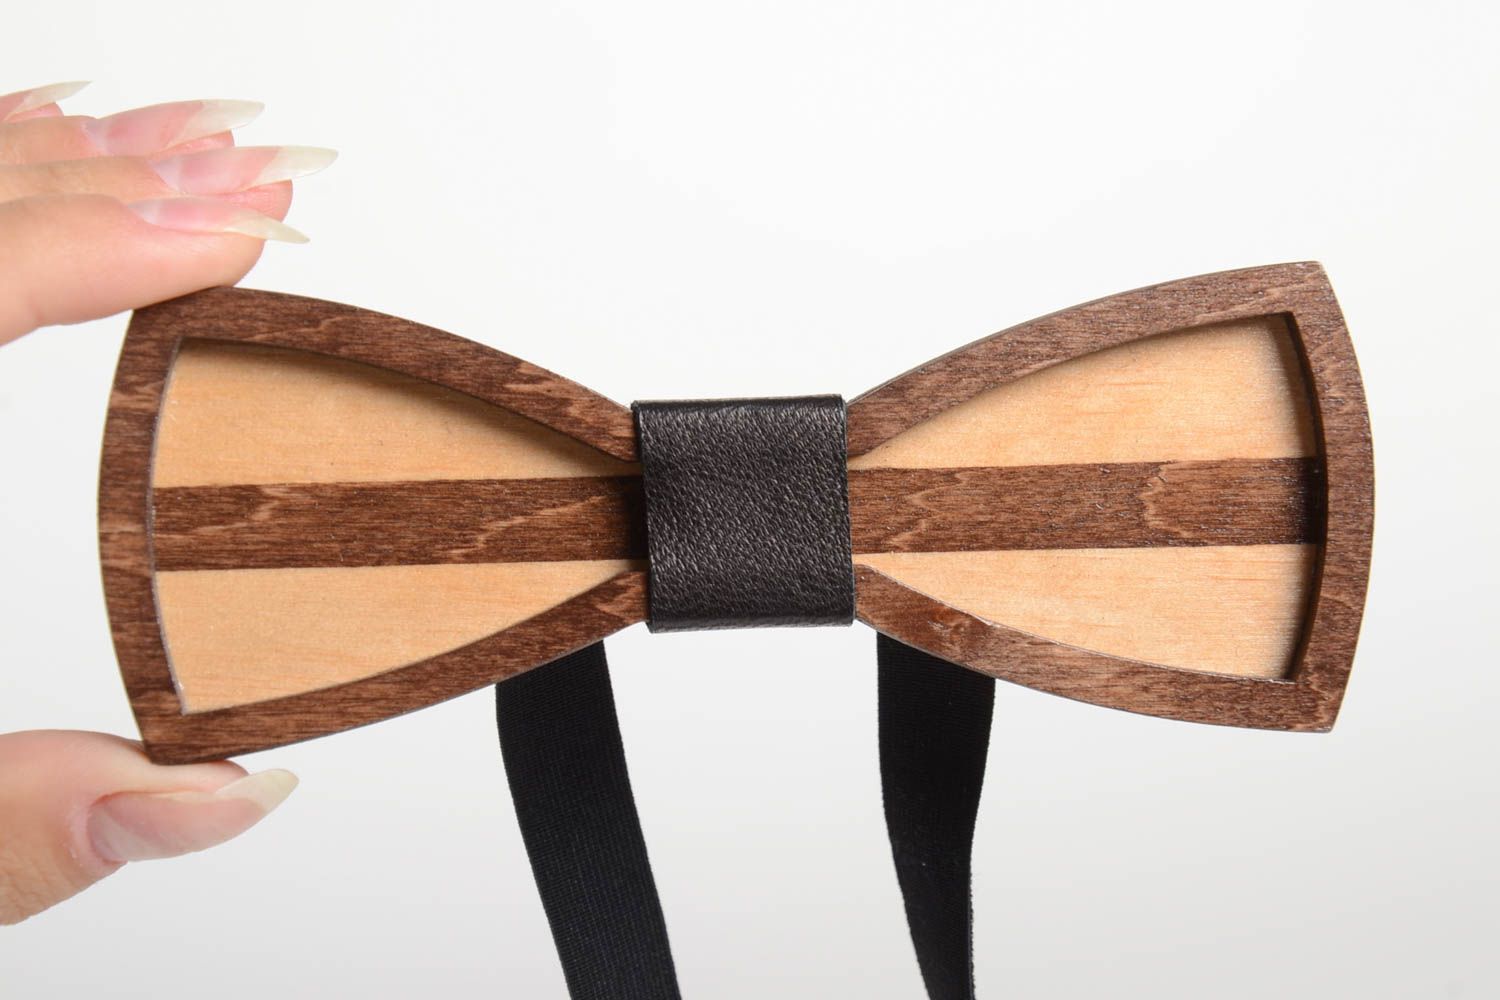 Handmade wood bow tie wooden tie wooden bow designer accessories for men photo 3